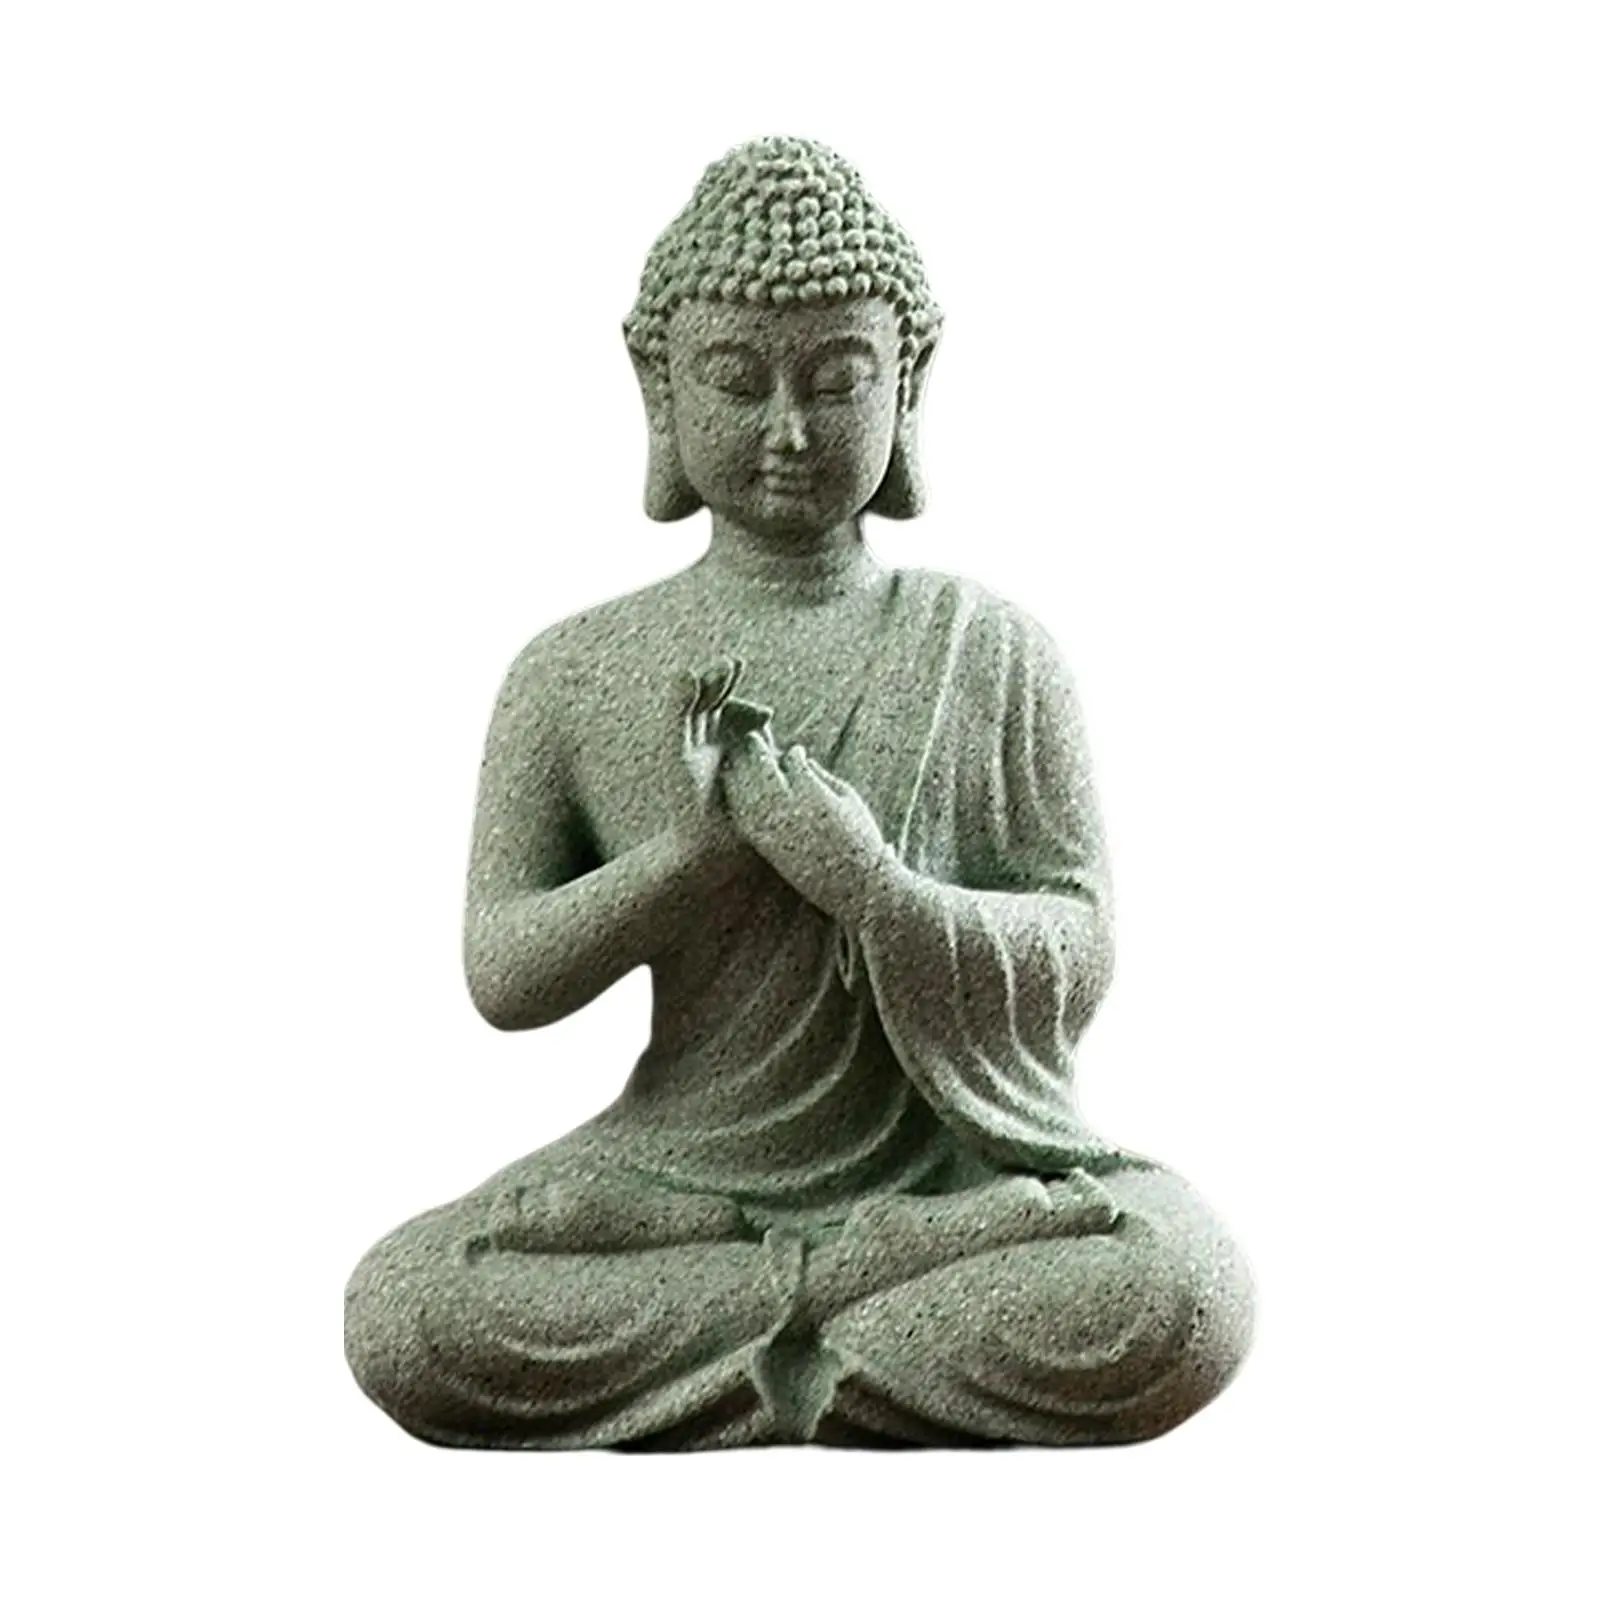 Small Buddha Statue Ornament Yoga Figurines rustic zen Oriental Decorative for Meditating Desktop Office Indoor Desk